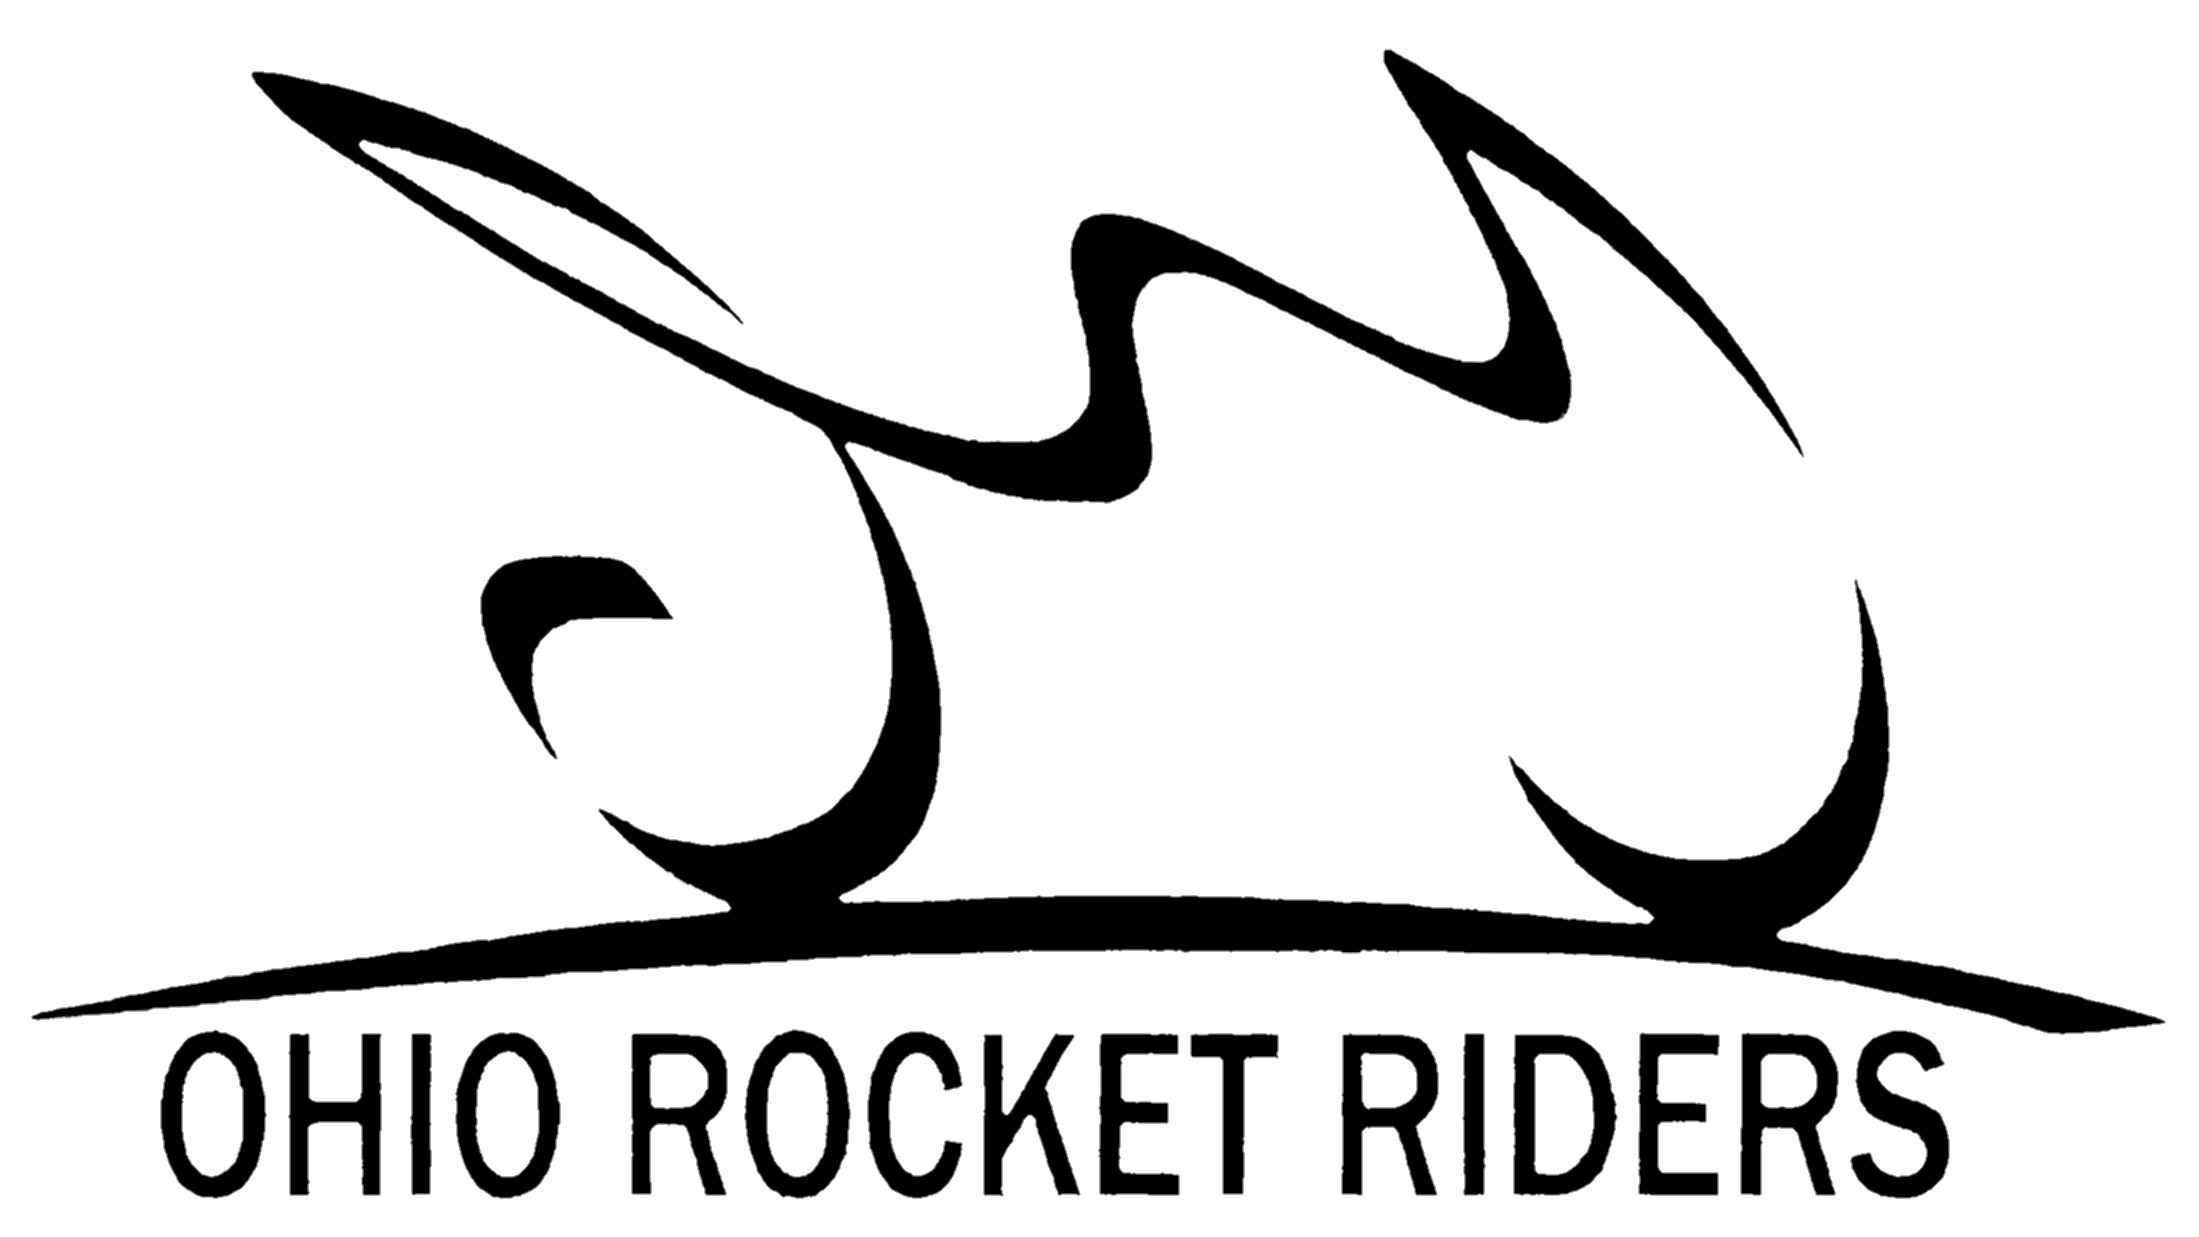 OHIO ROCKET RIDERS